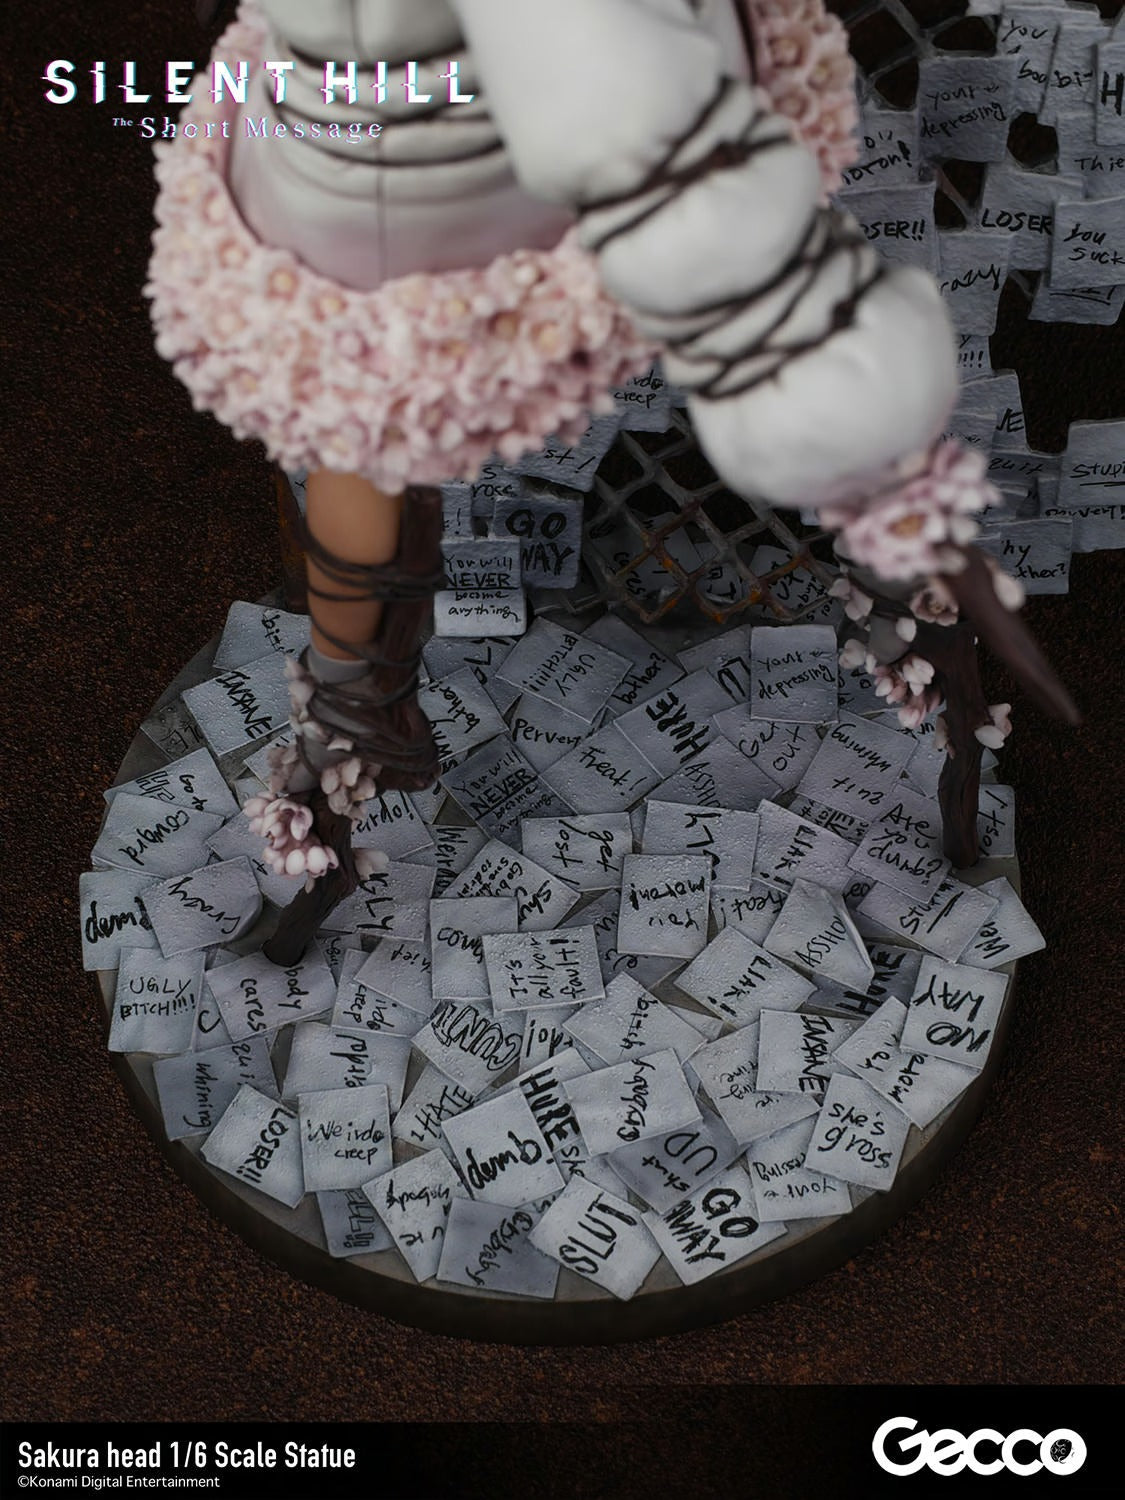 Gecco Scale Figure: Silent Hill The Short Message - Sakura Head Escala 1/6